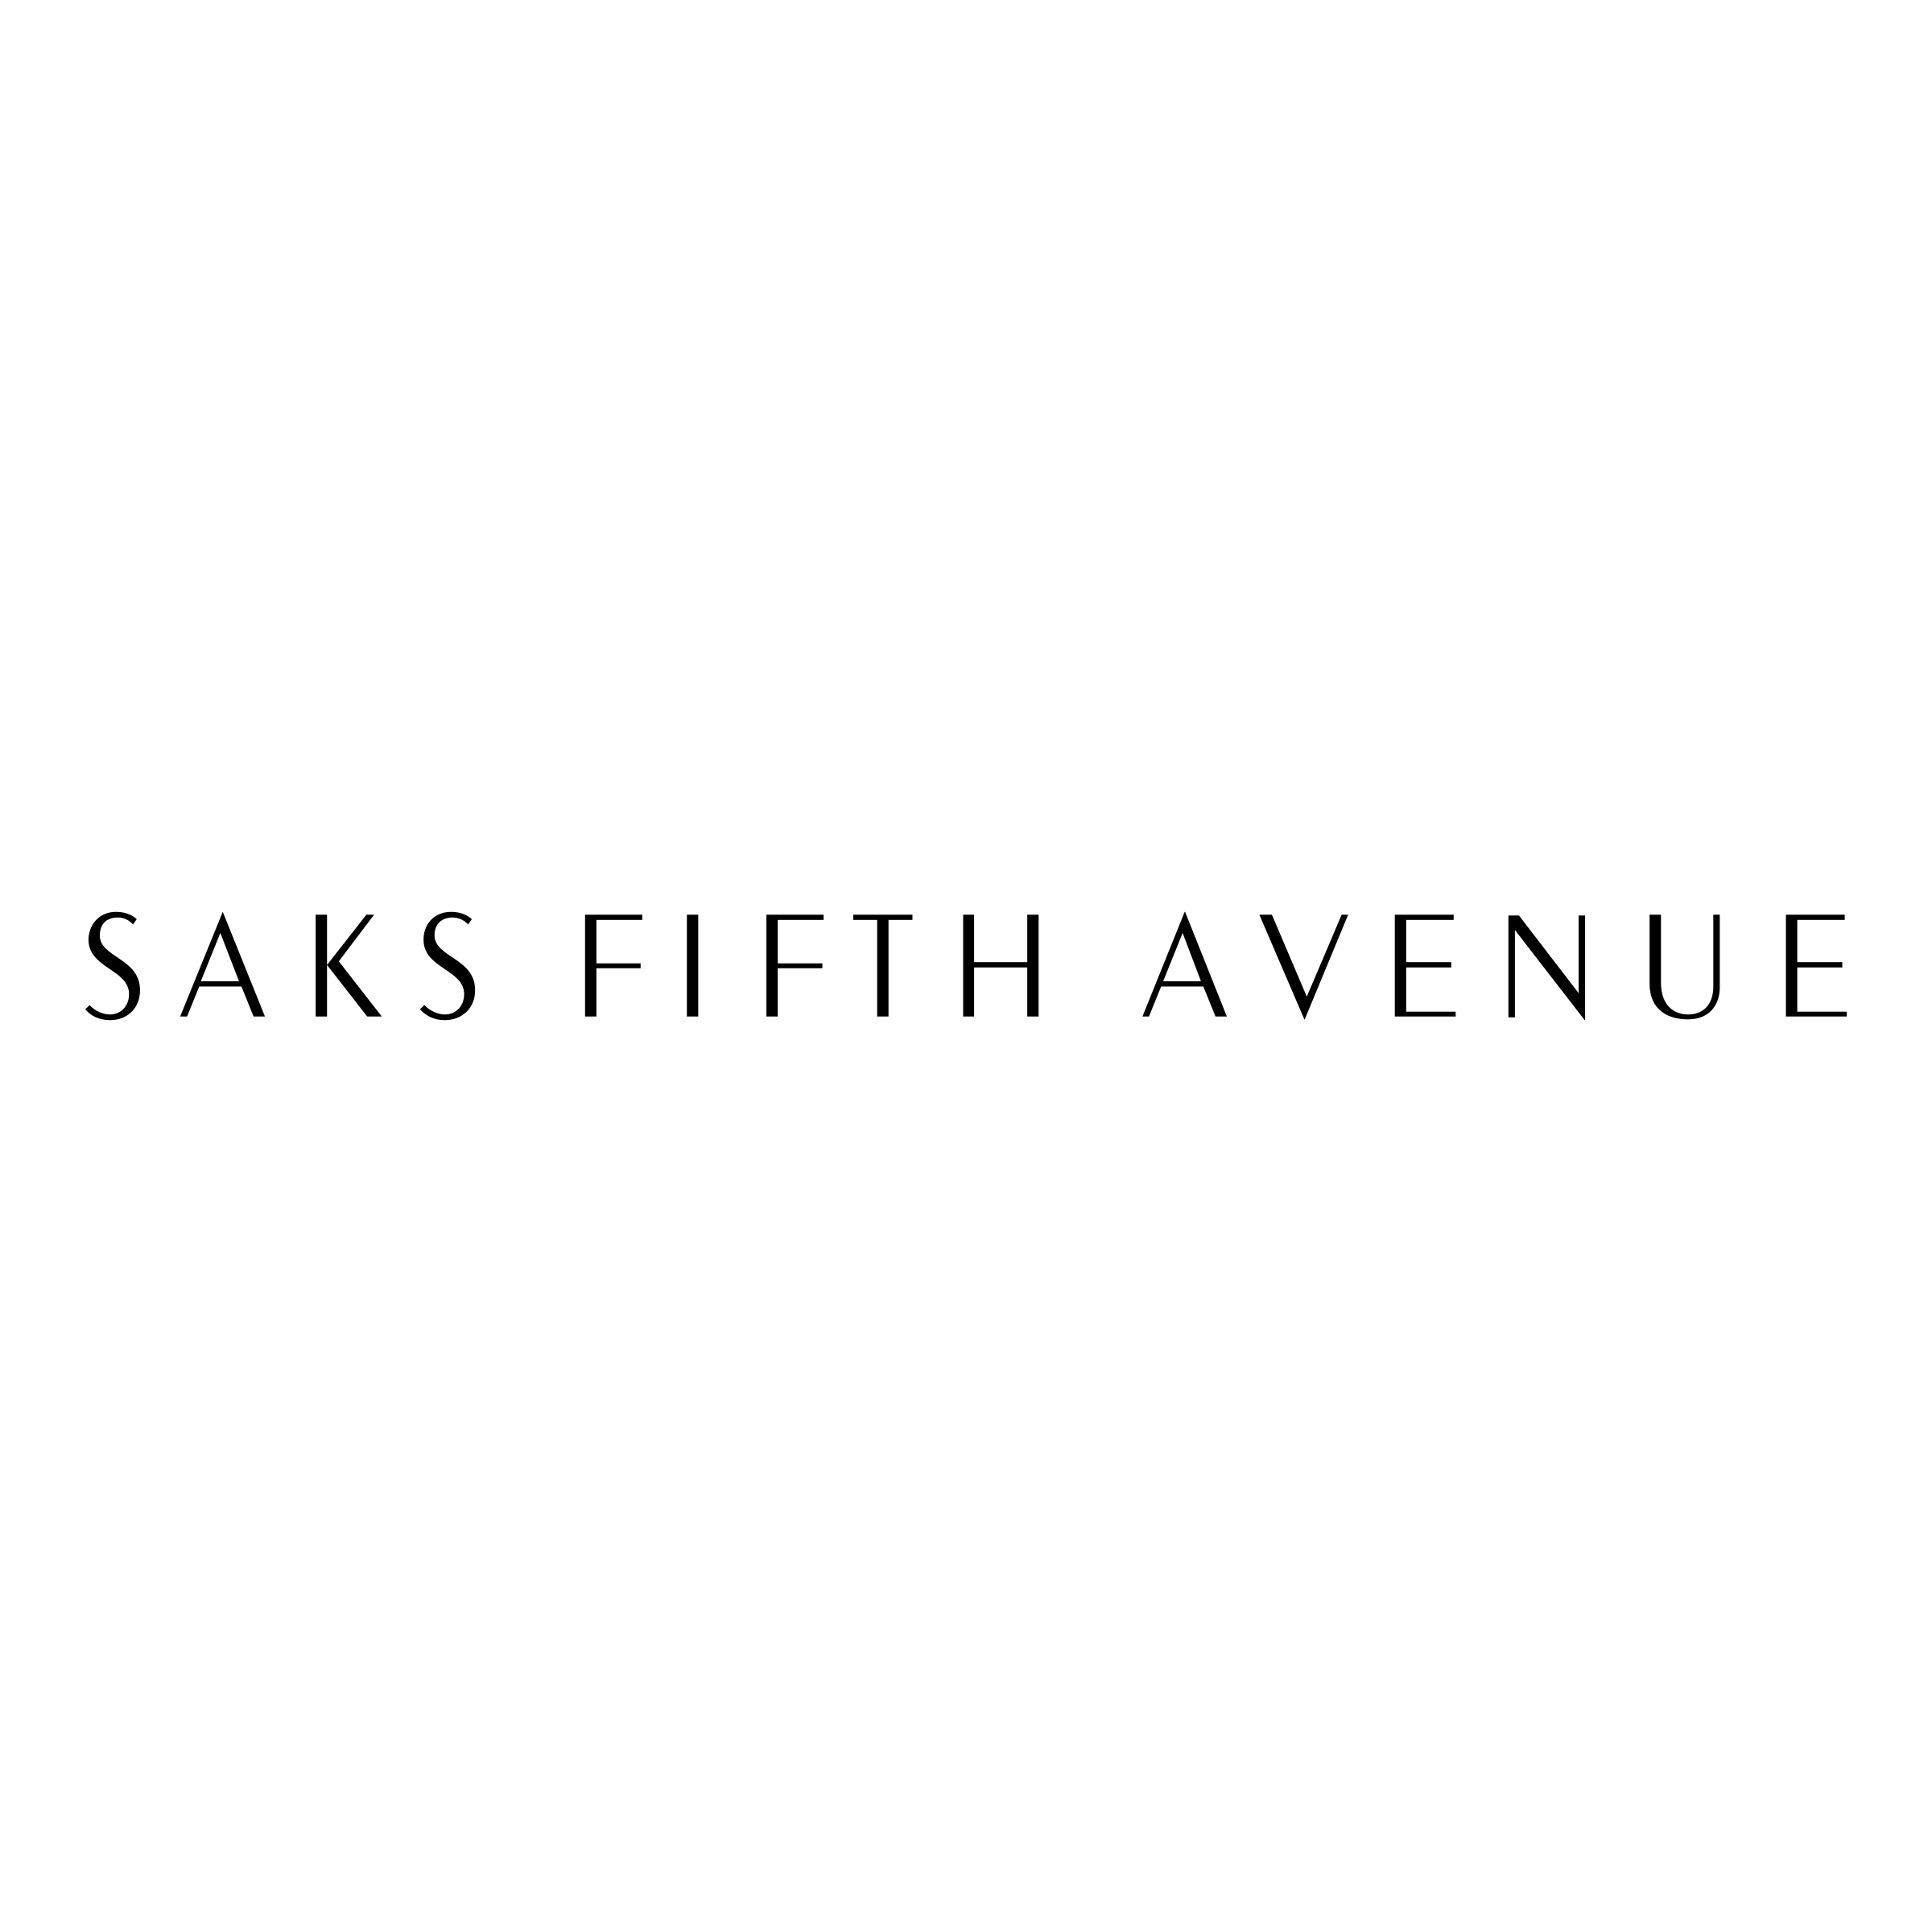 Saks Fifth Avenue Logo - Saks Fifth Avenue Logo PNG Transparent & SVG Vector